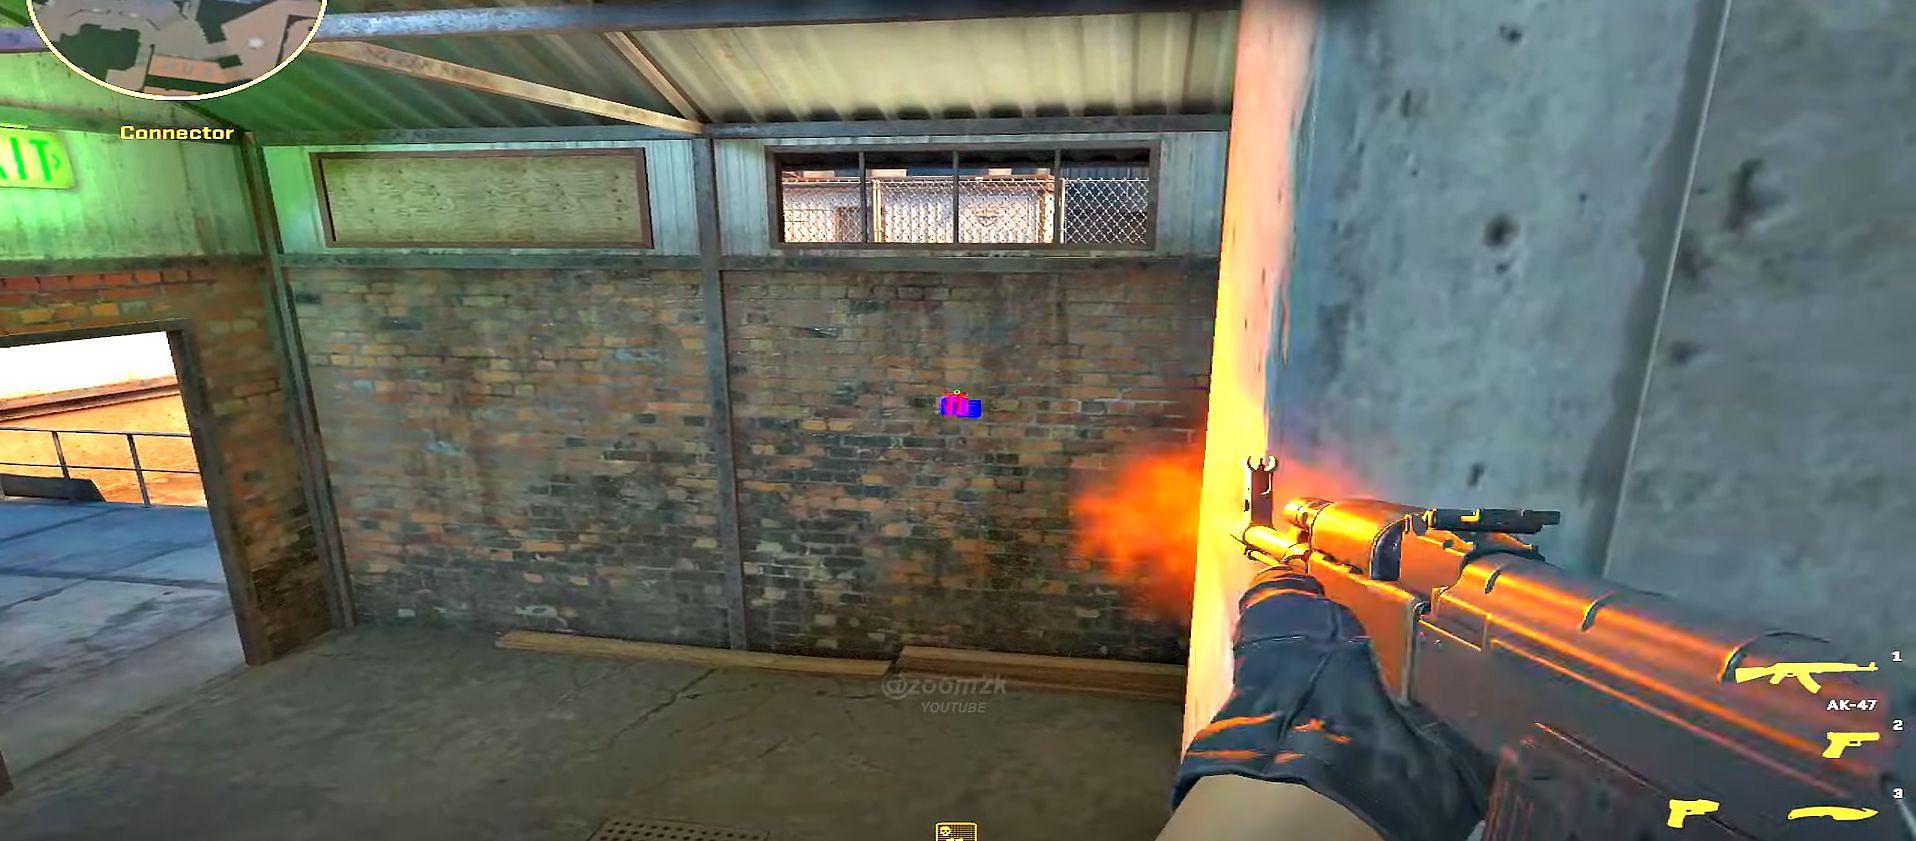 Wall bang spot on Connector (Image via Valve || YouTube/Zoom2k)